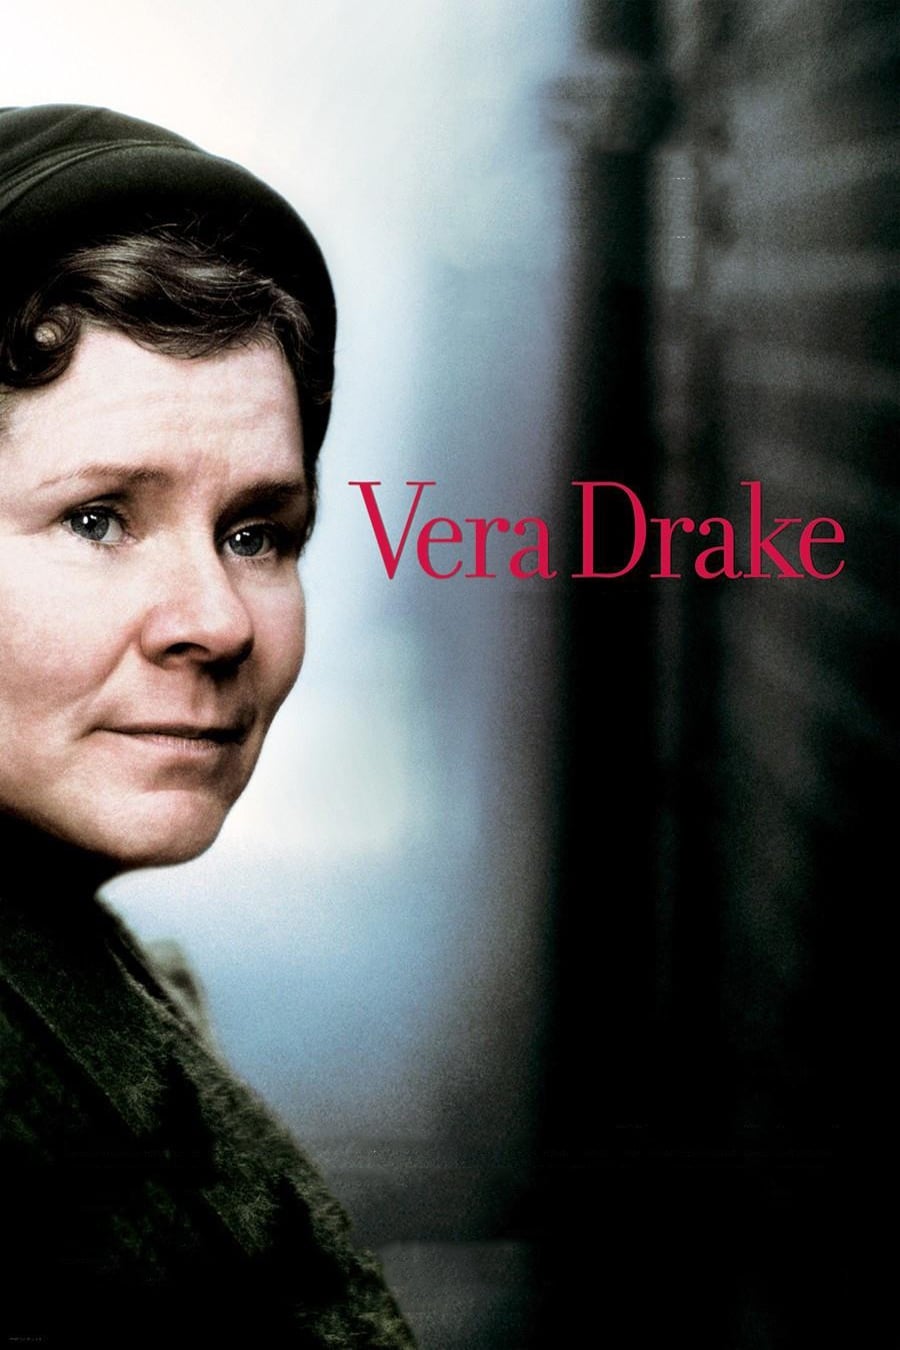 El secreto de Vera Drake pelicula completa, ver online y descargar - Pelicula El Secreto De Vera Drake